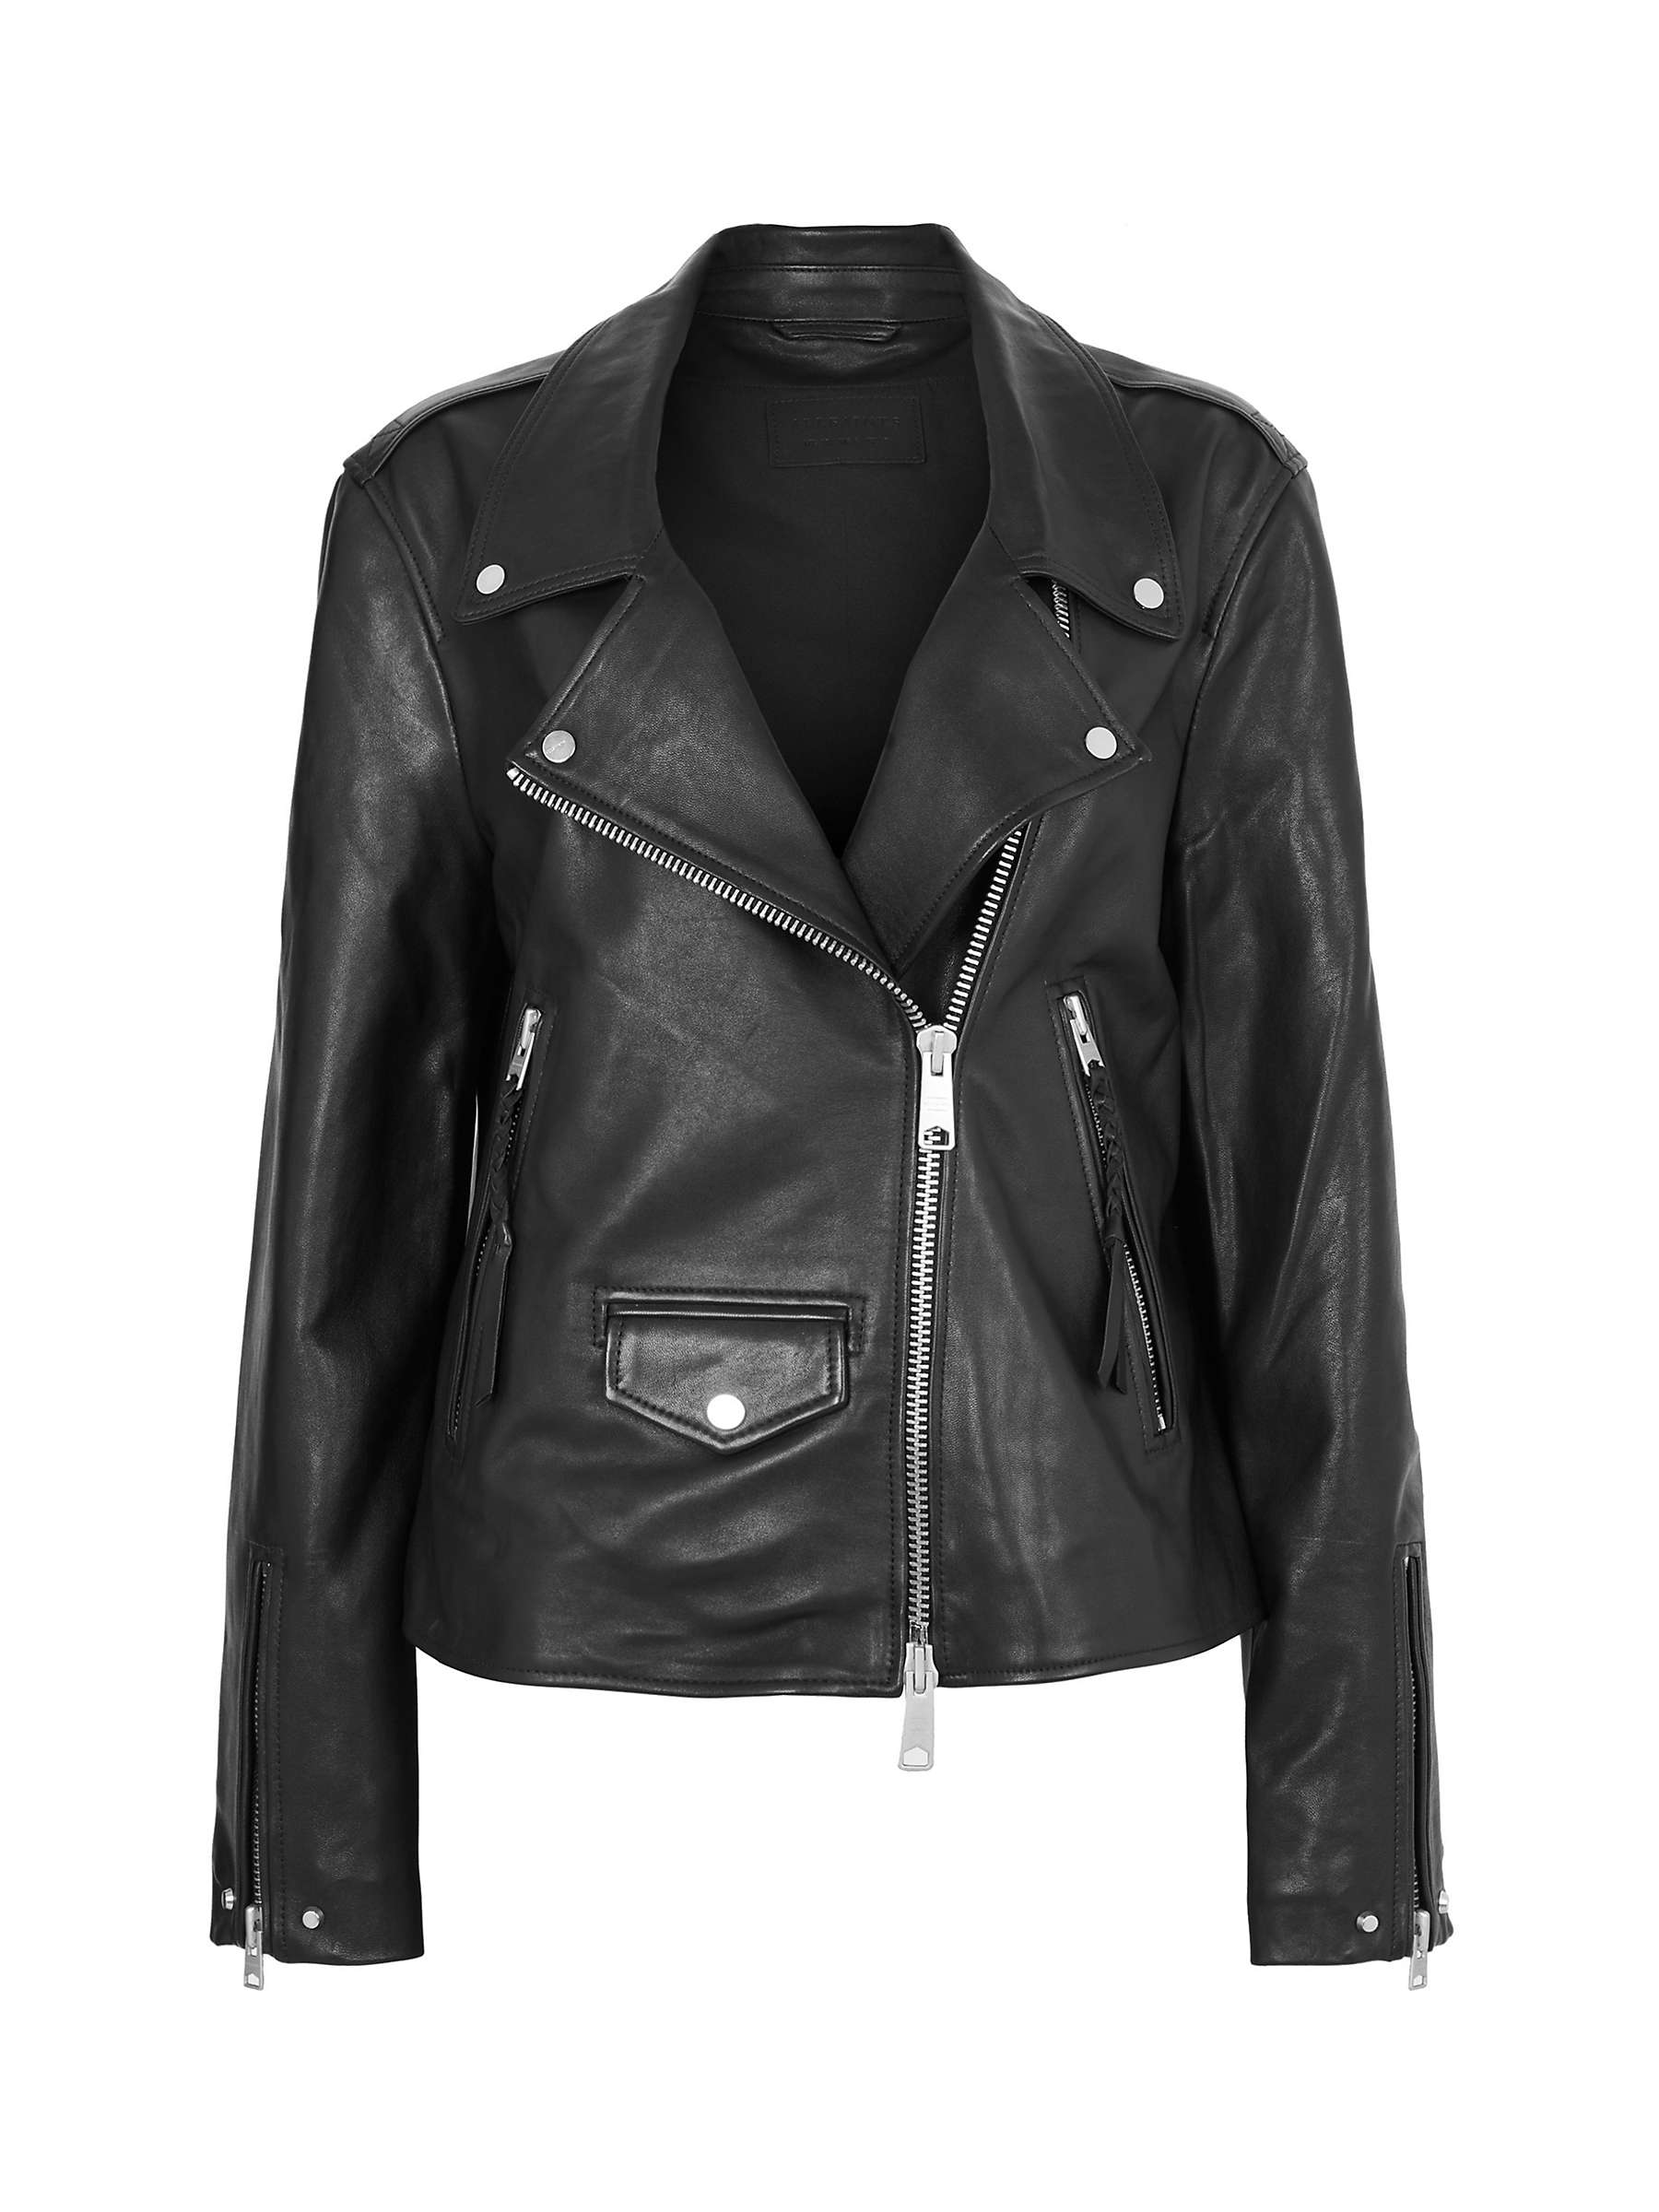 AllSaints Lyra Leather Biker Jacket, Black at John Lewis & Partners